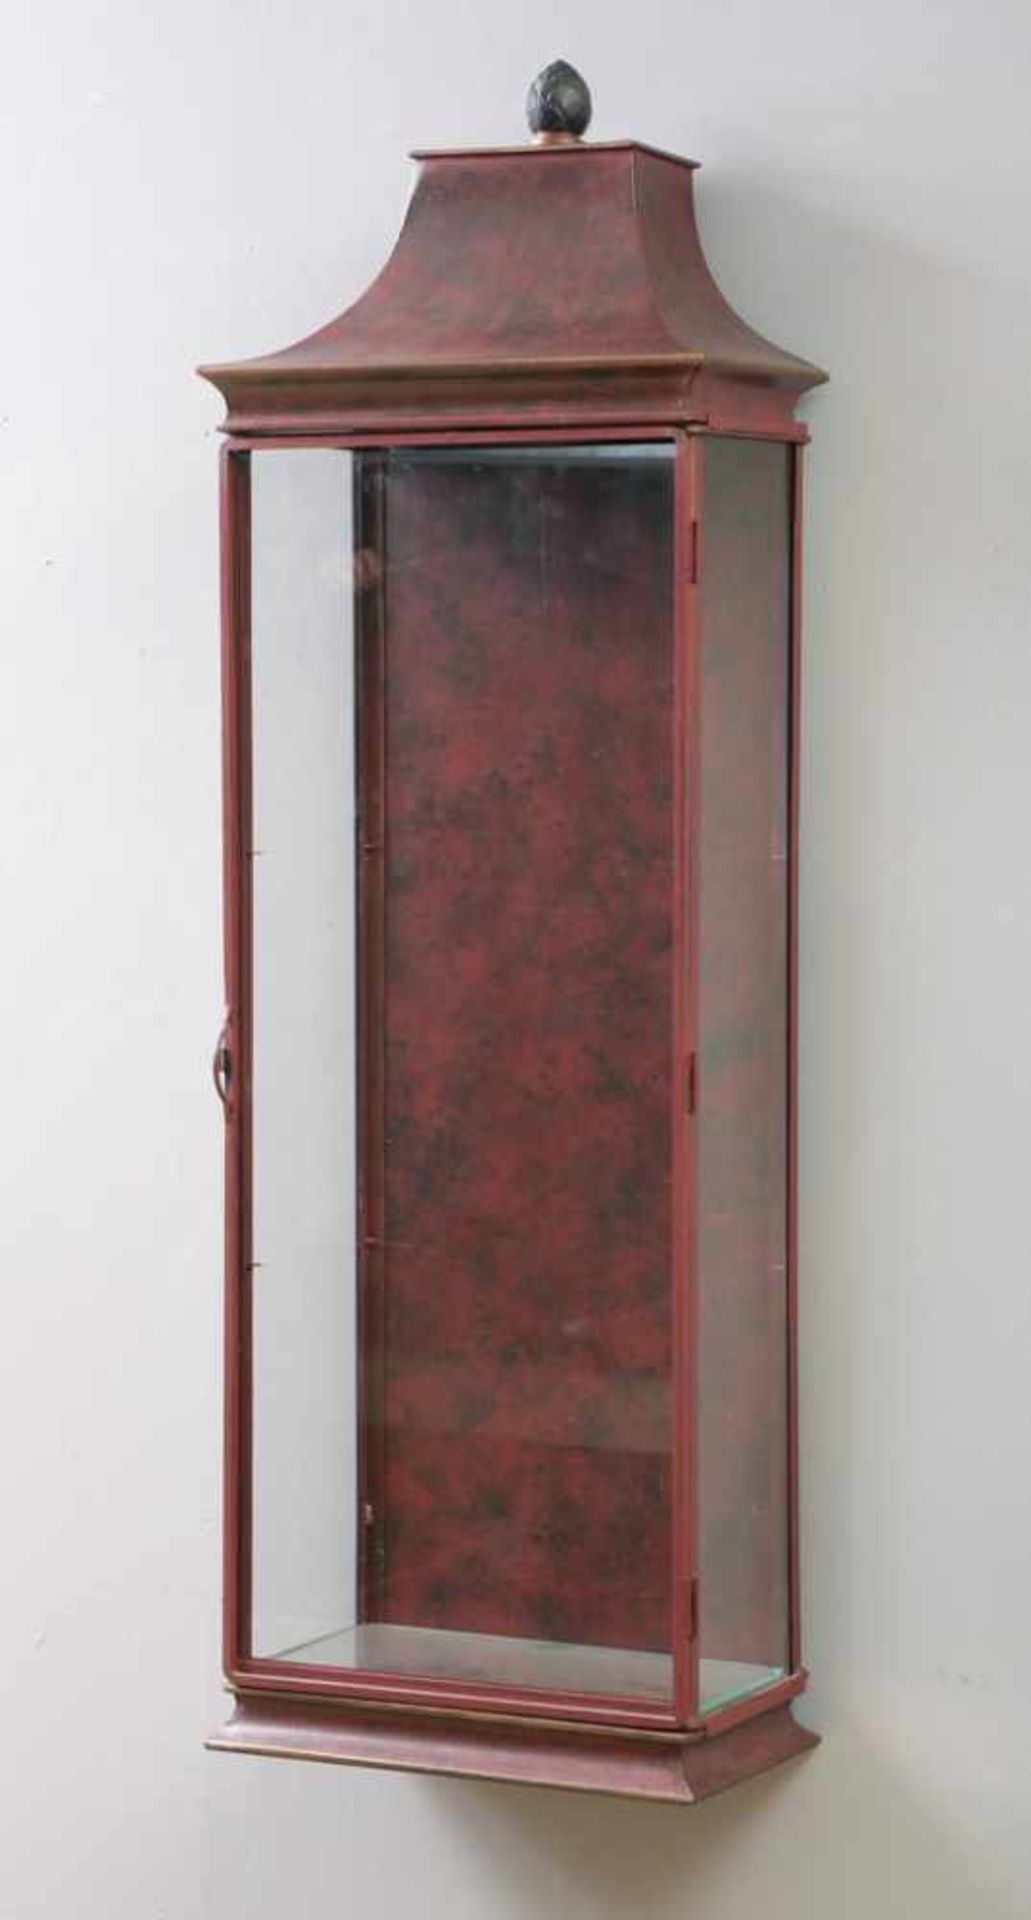 Große Laterne/Vitrinenschrank Metall, rot lackiert, 3-seitig verglast, pagodenförmiges Dach mit